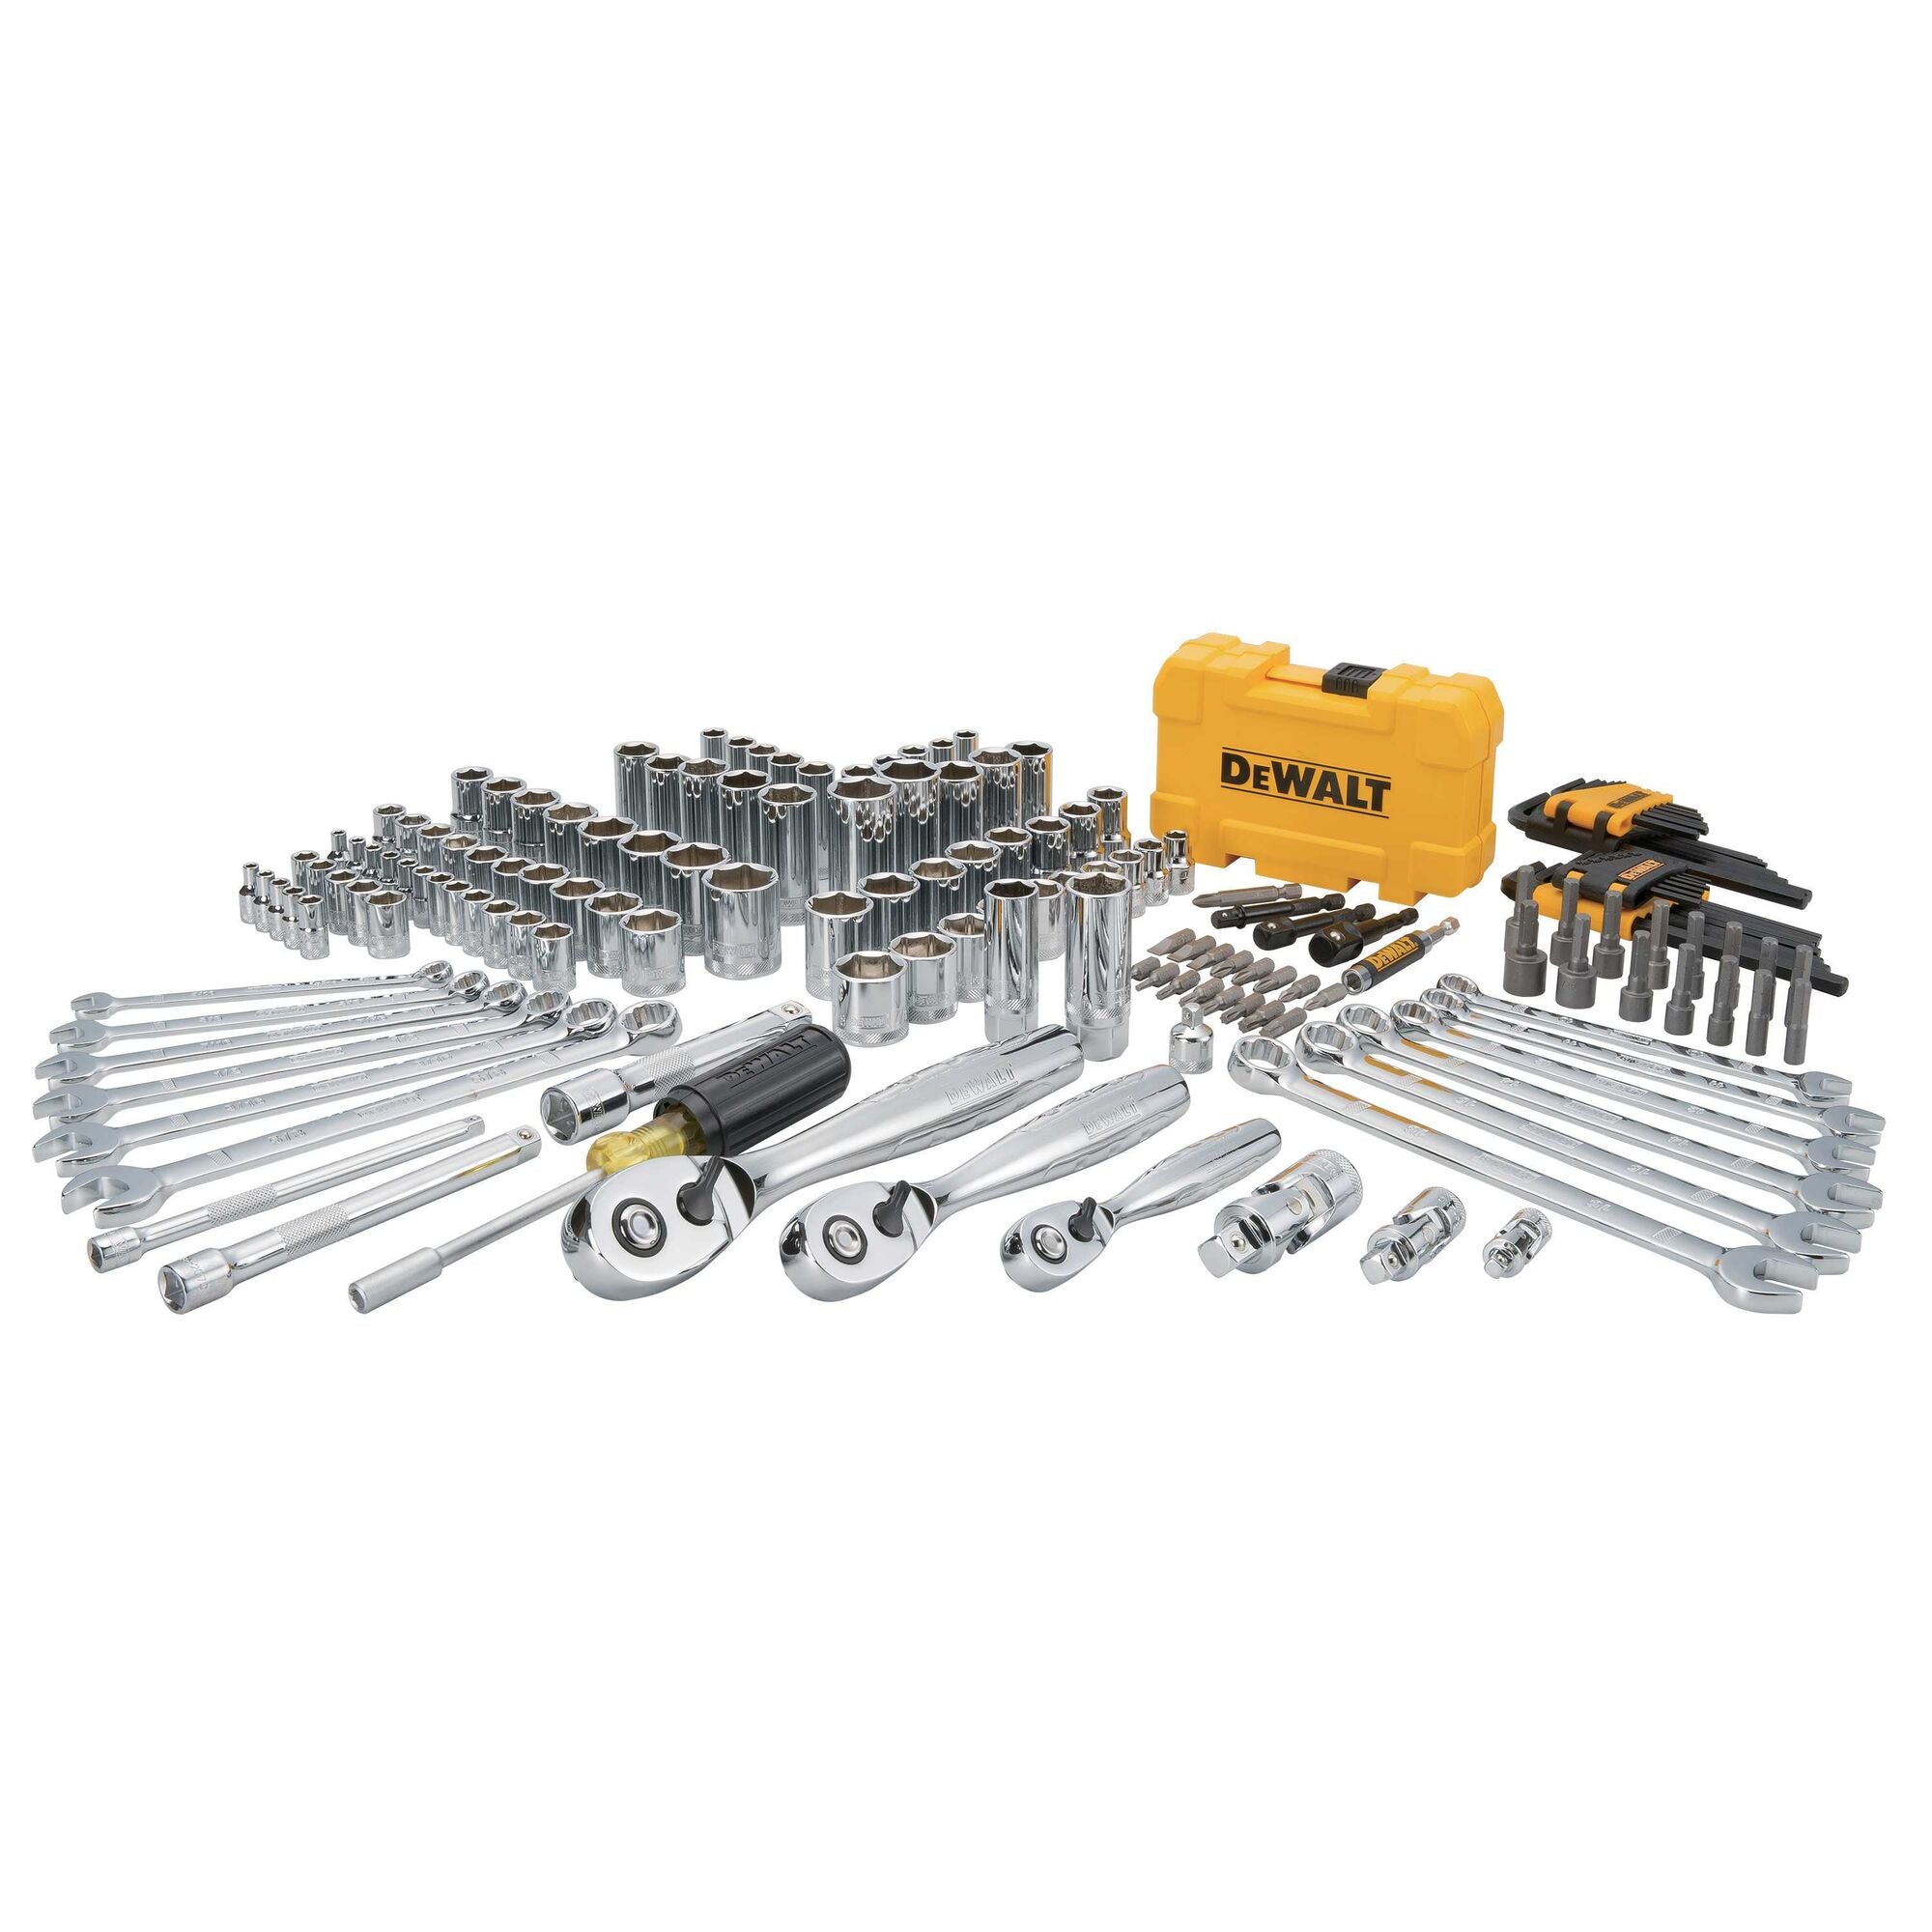 168-Piece Mechanics Tool Set